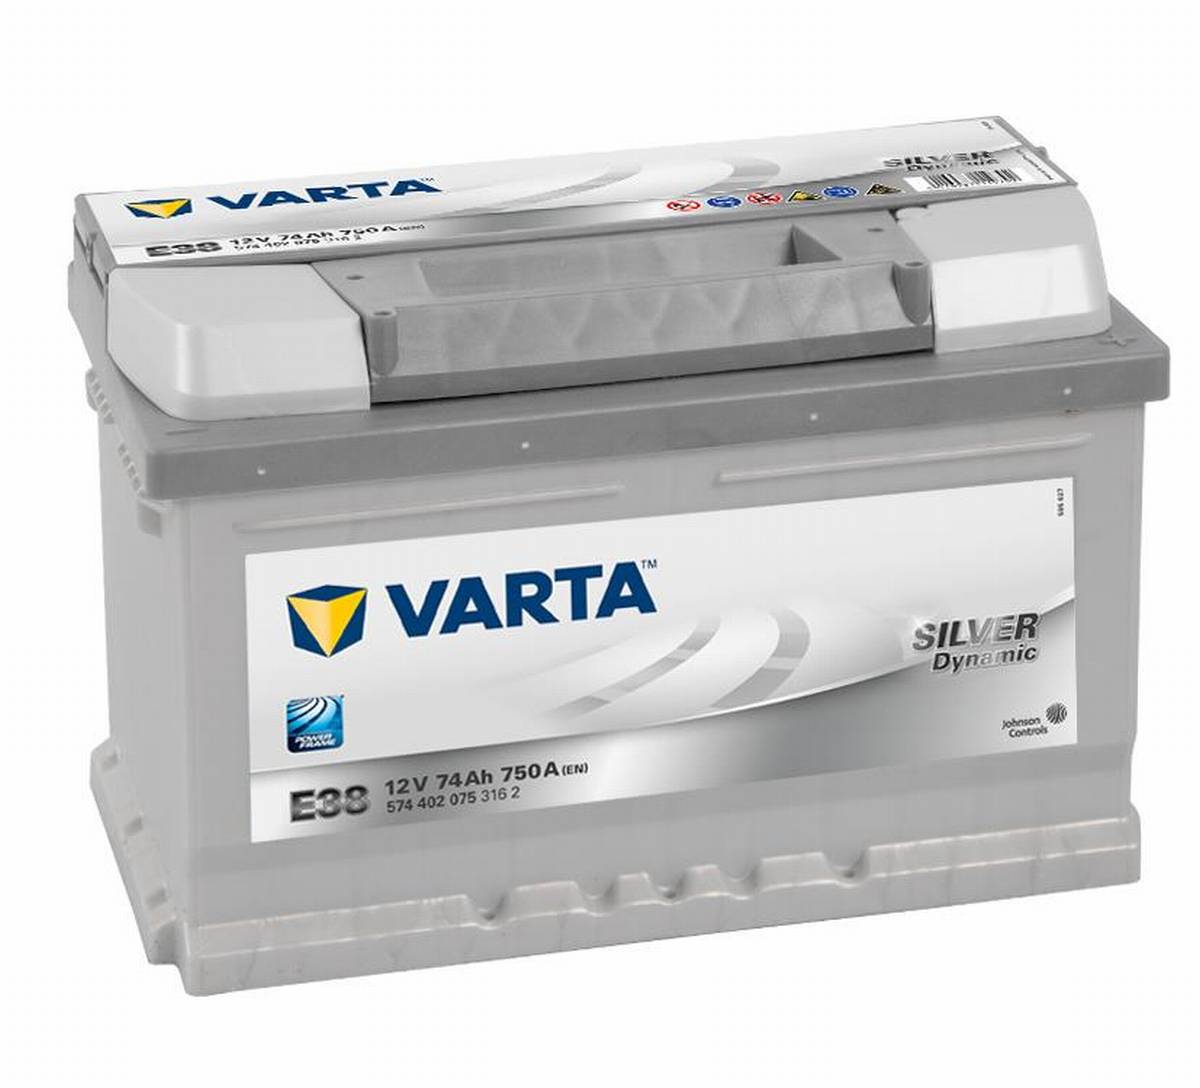 VARTA E38 Silver Dynamic 12V 74Ah 750A batteria auto 574 402 075